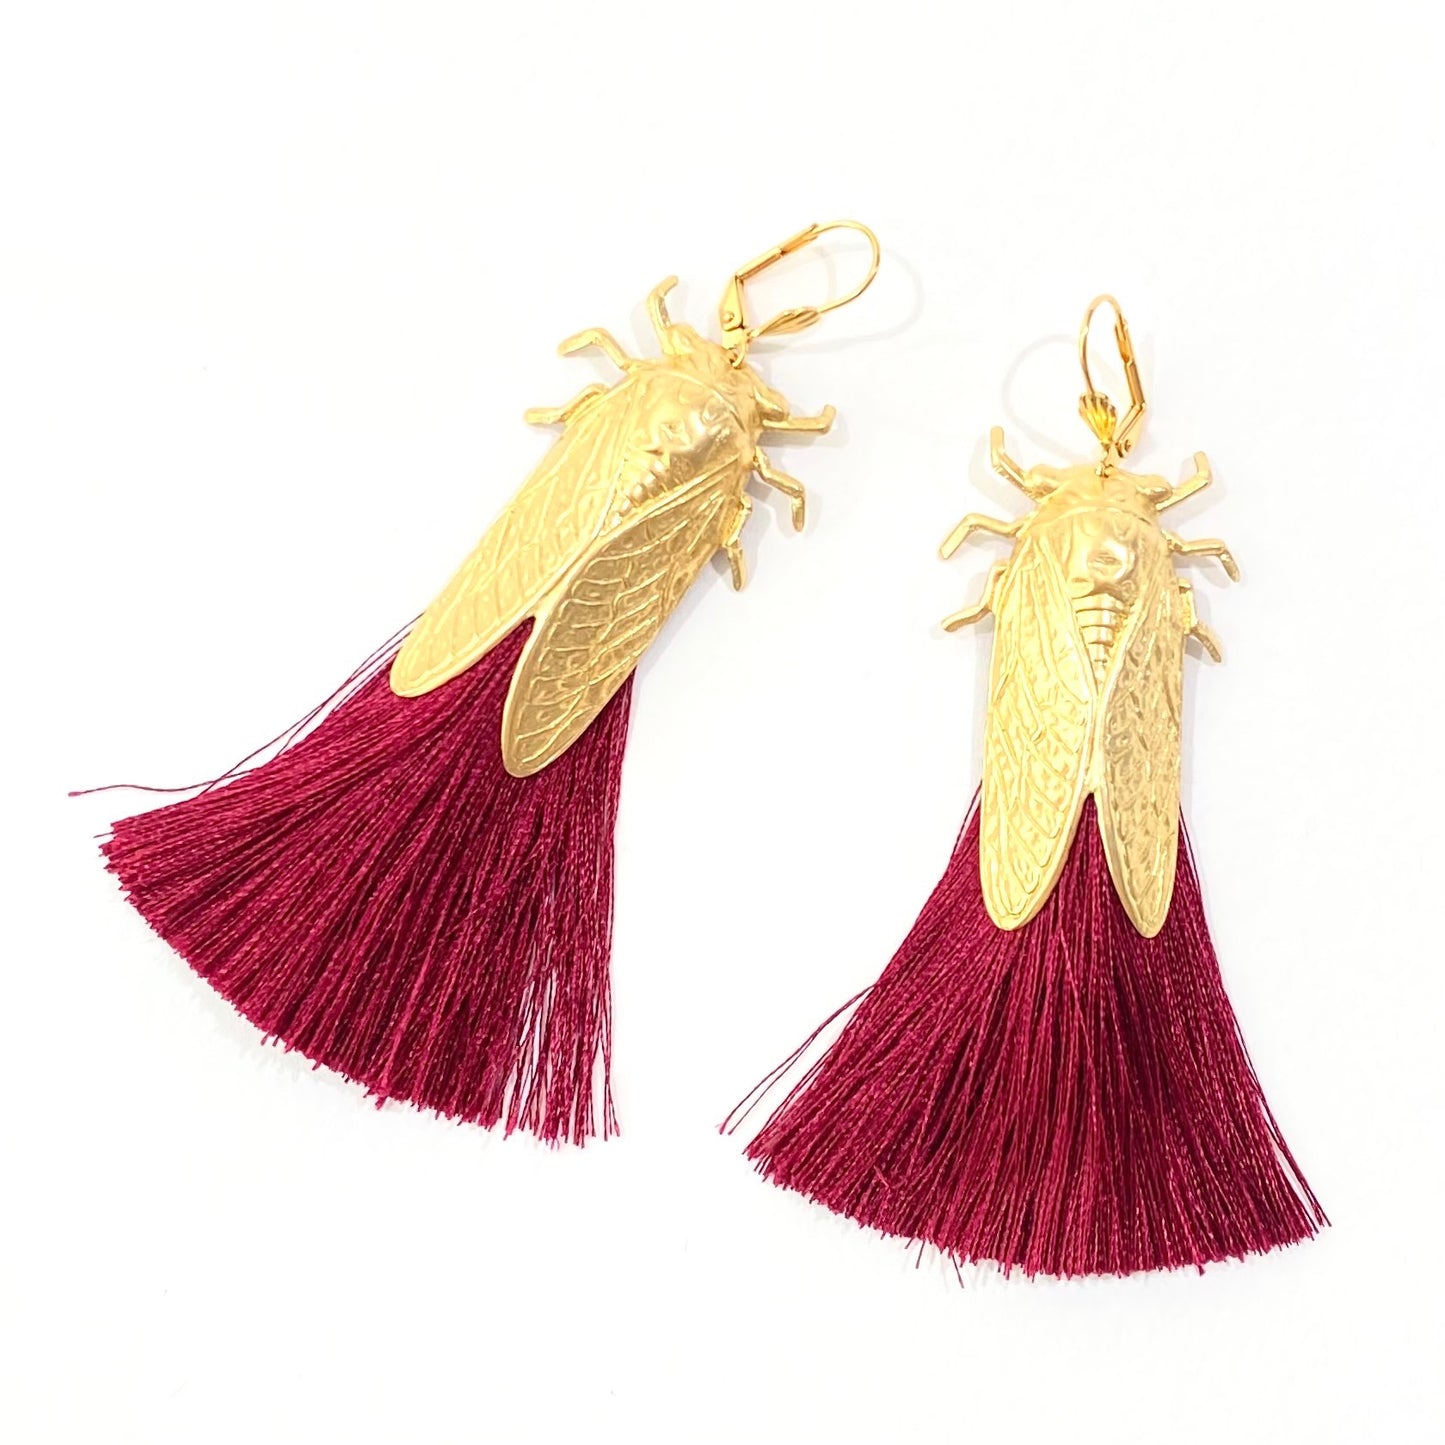 Cicada bug earrings with silky tassels